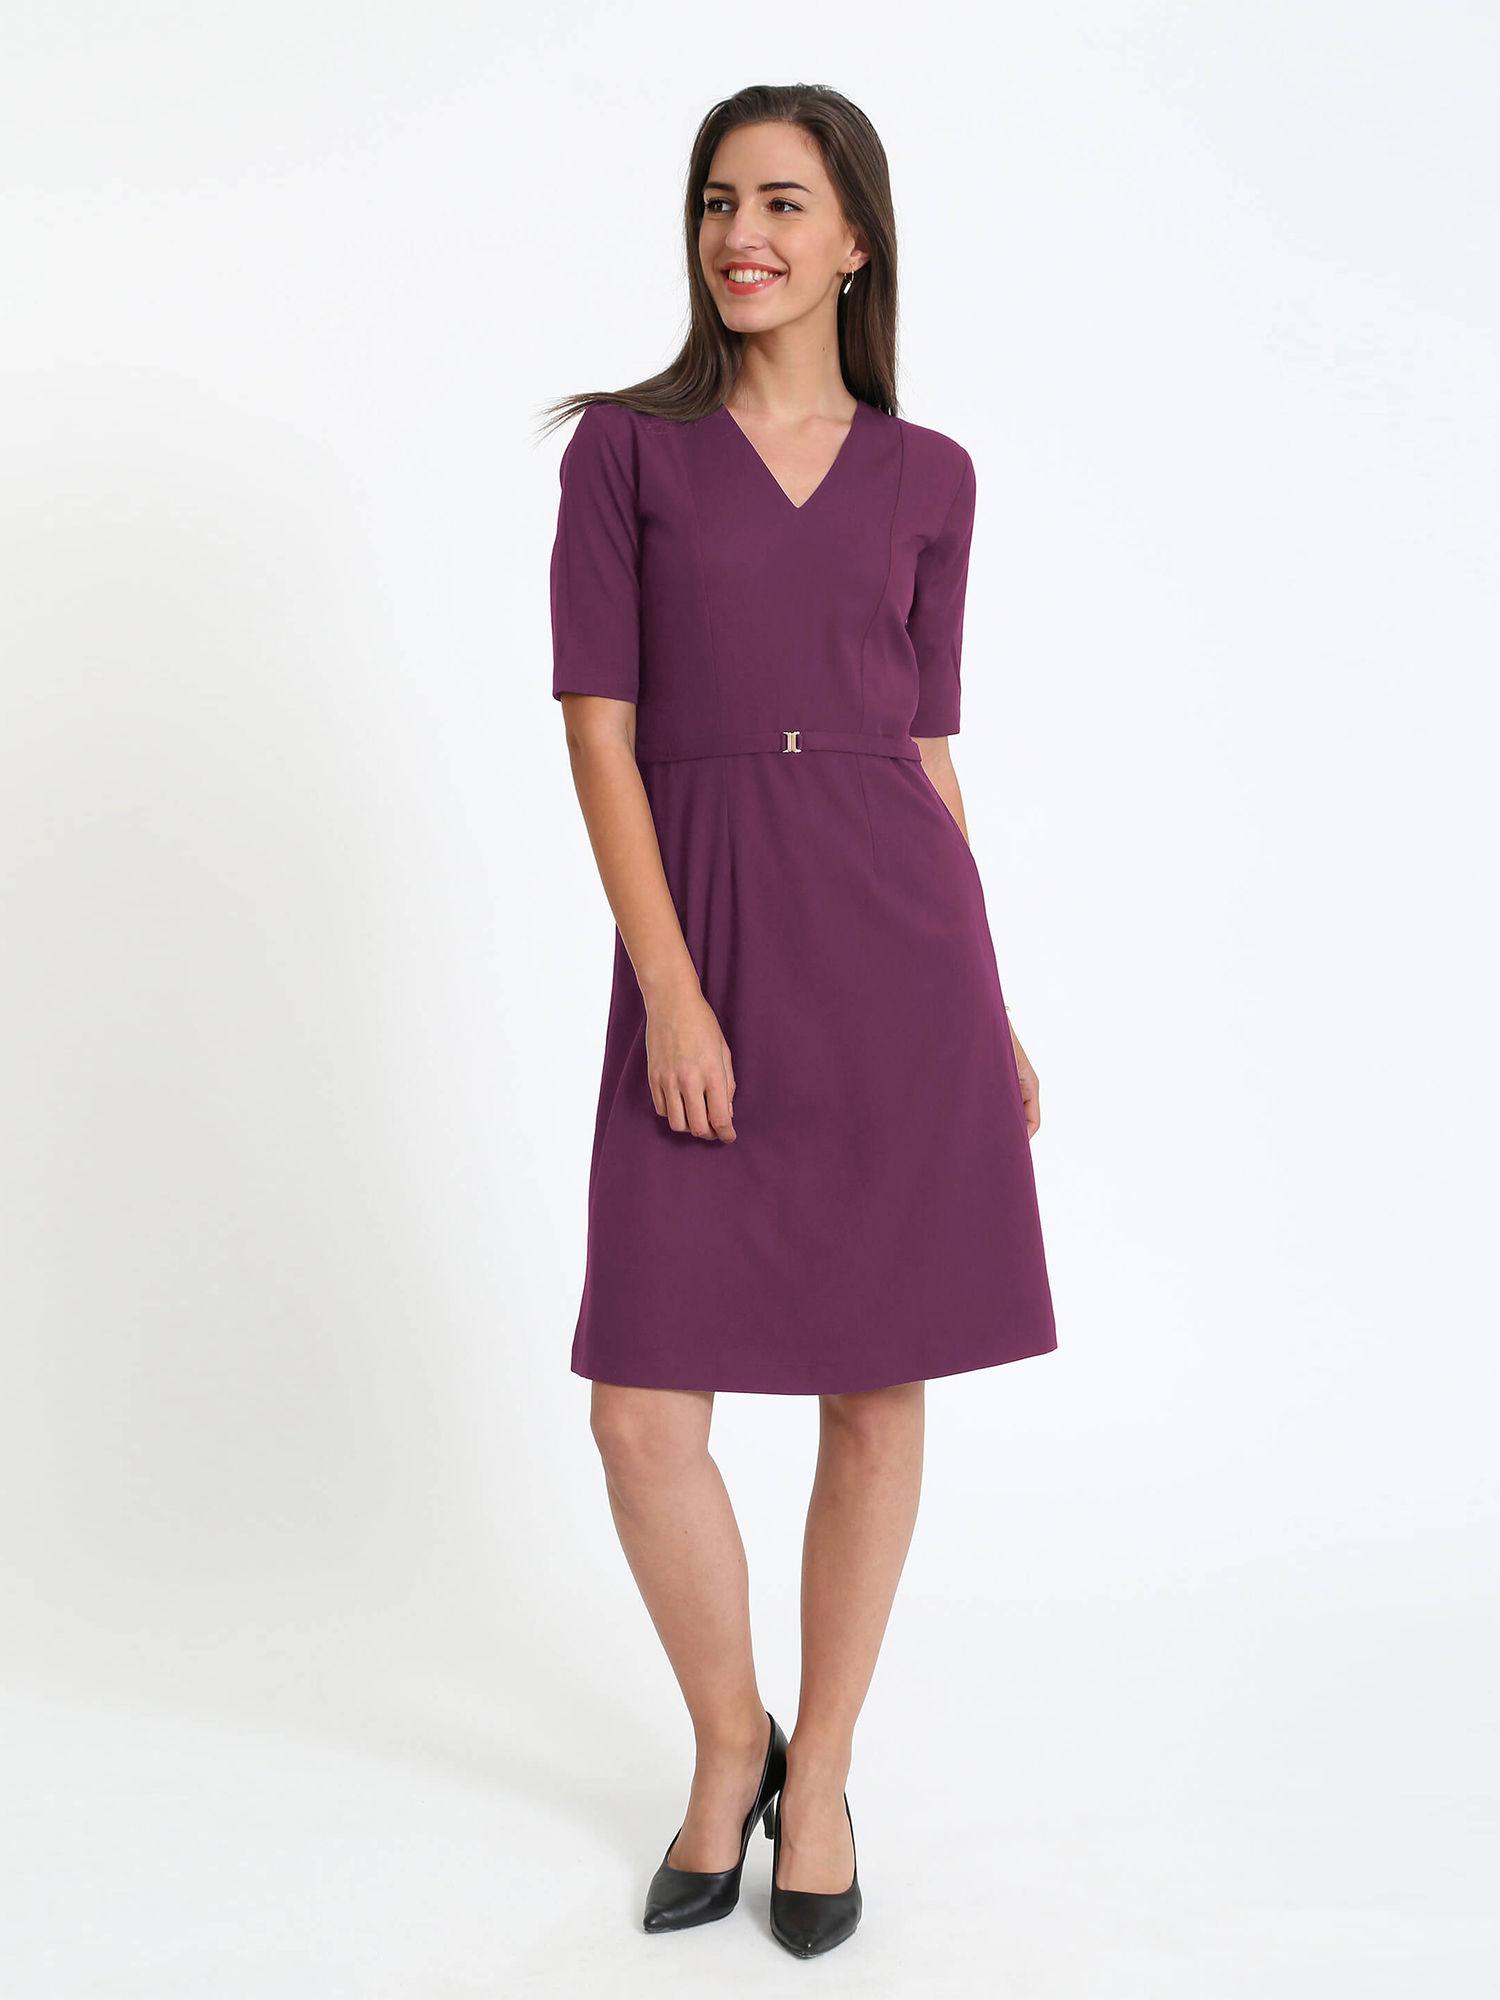 credible-purple v-neck fit a-line dress